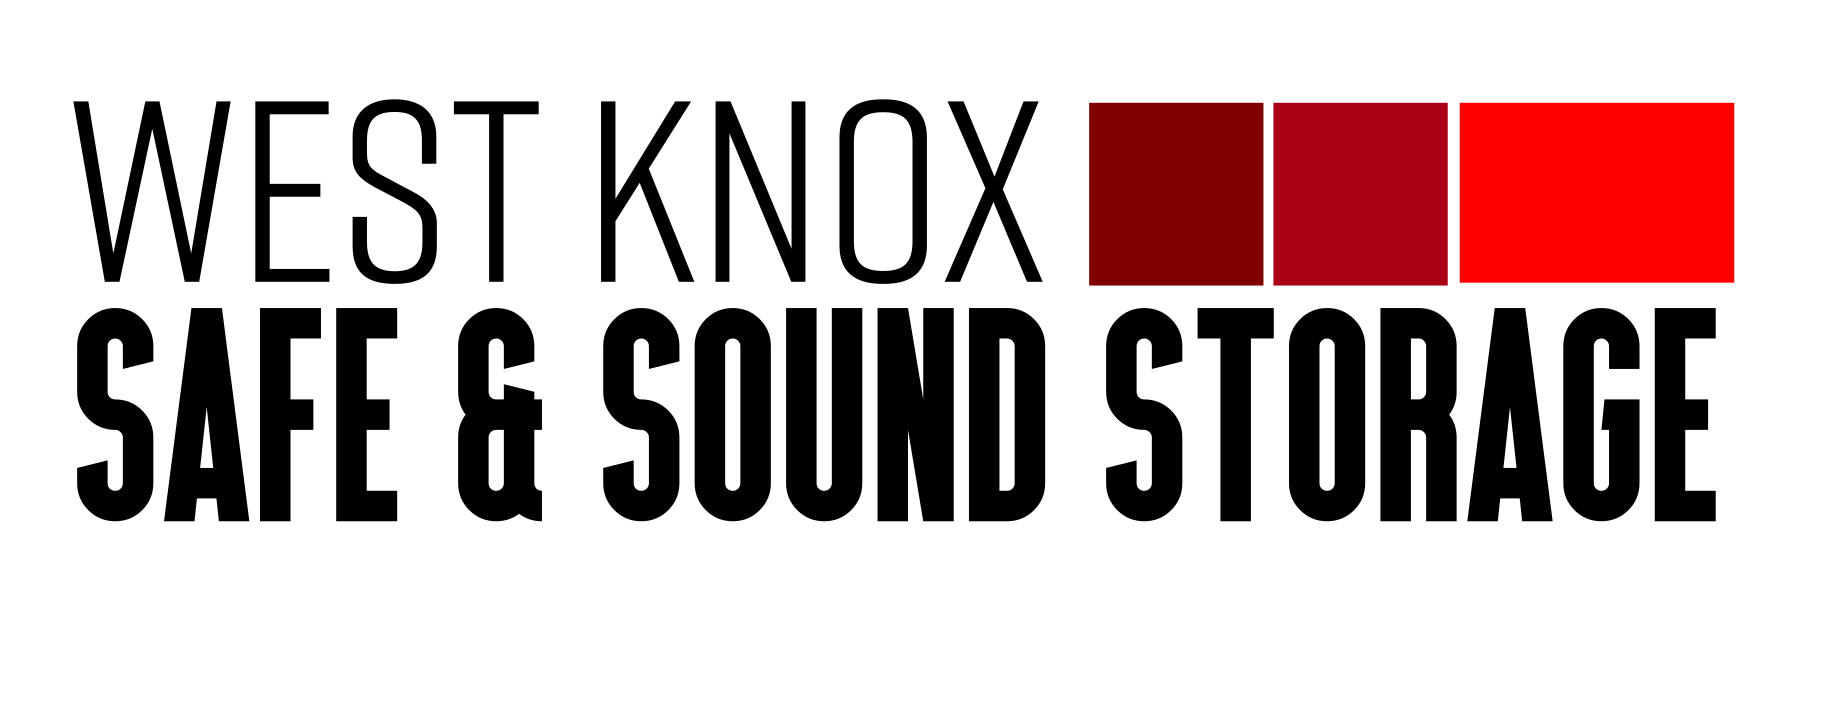 West Knox Safe and Sound Storage.